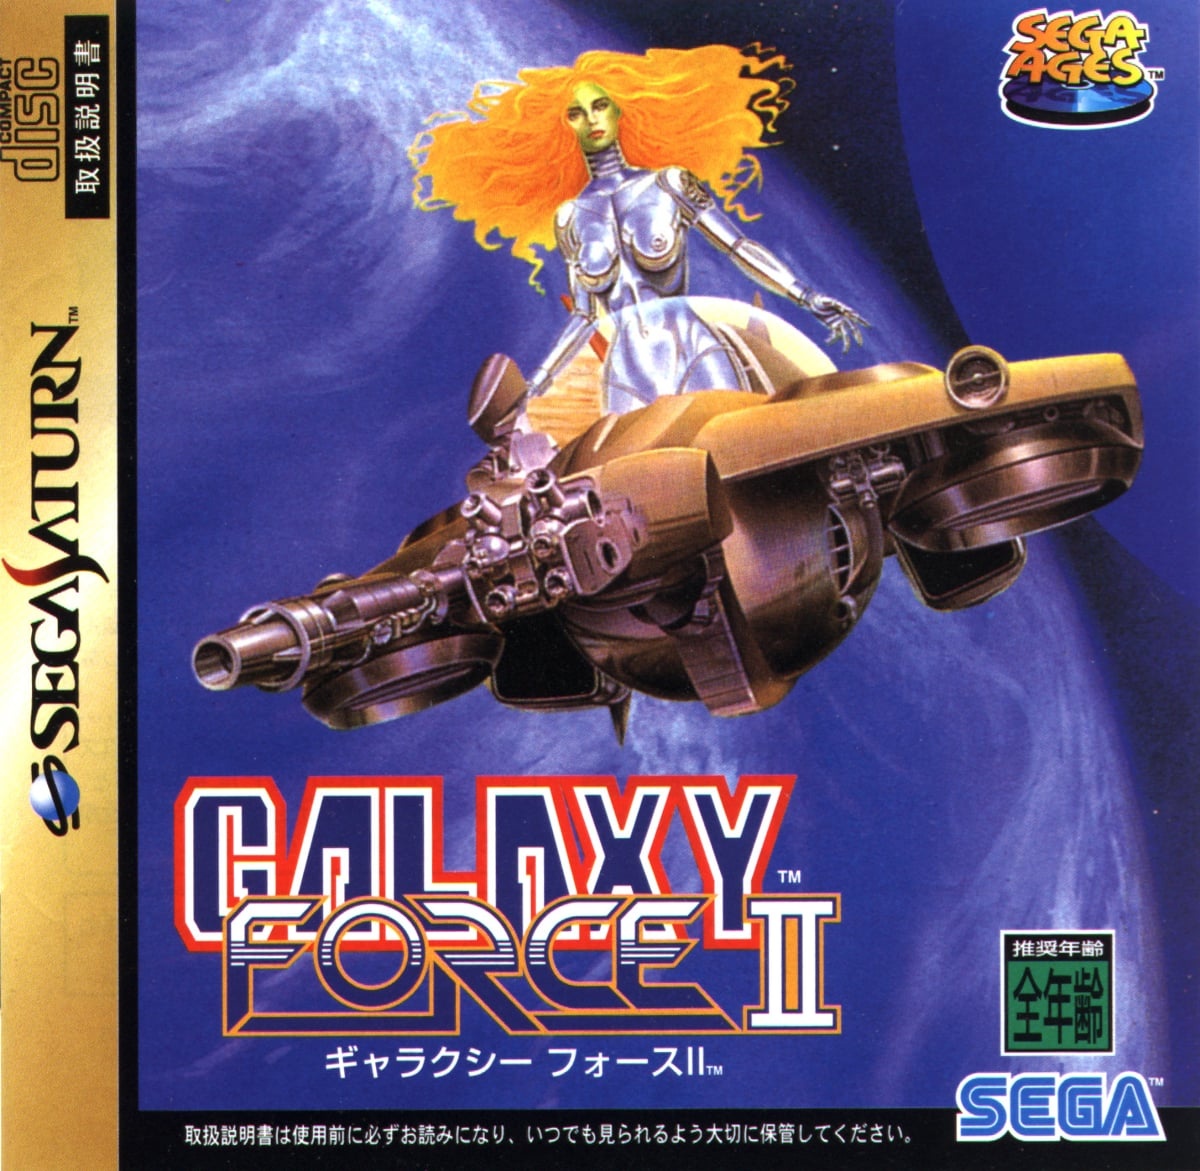 Capa do jogo Sega Ages Galaxy Force II